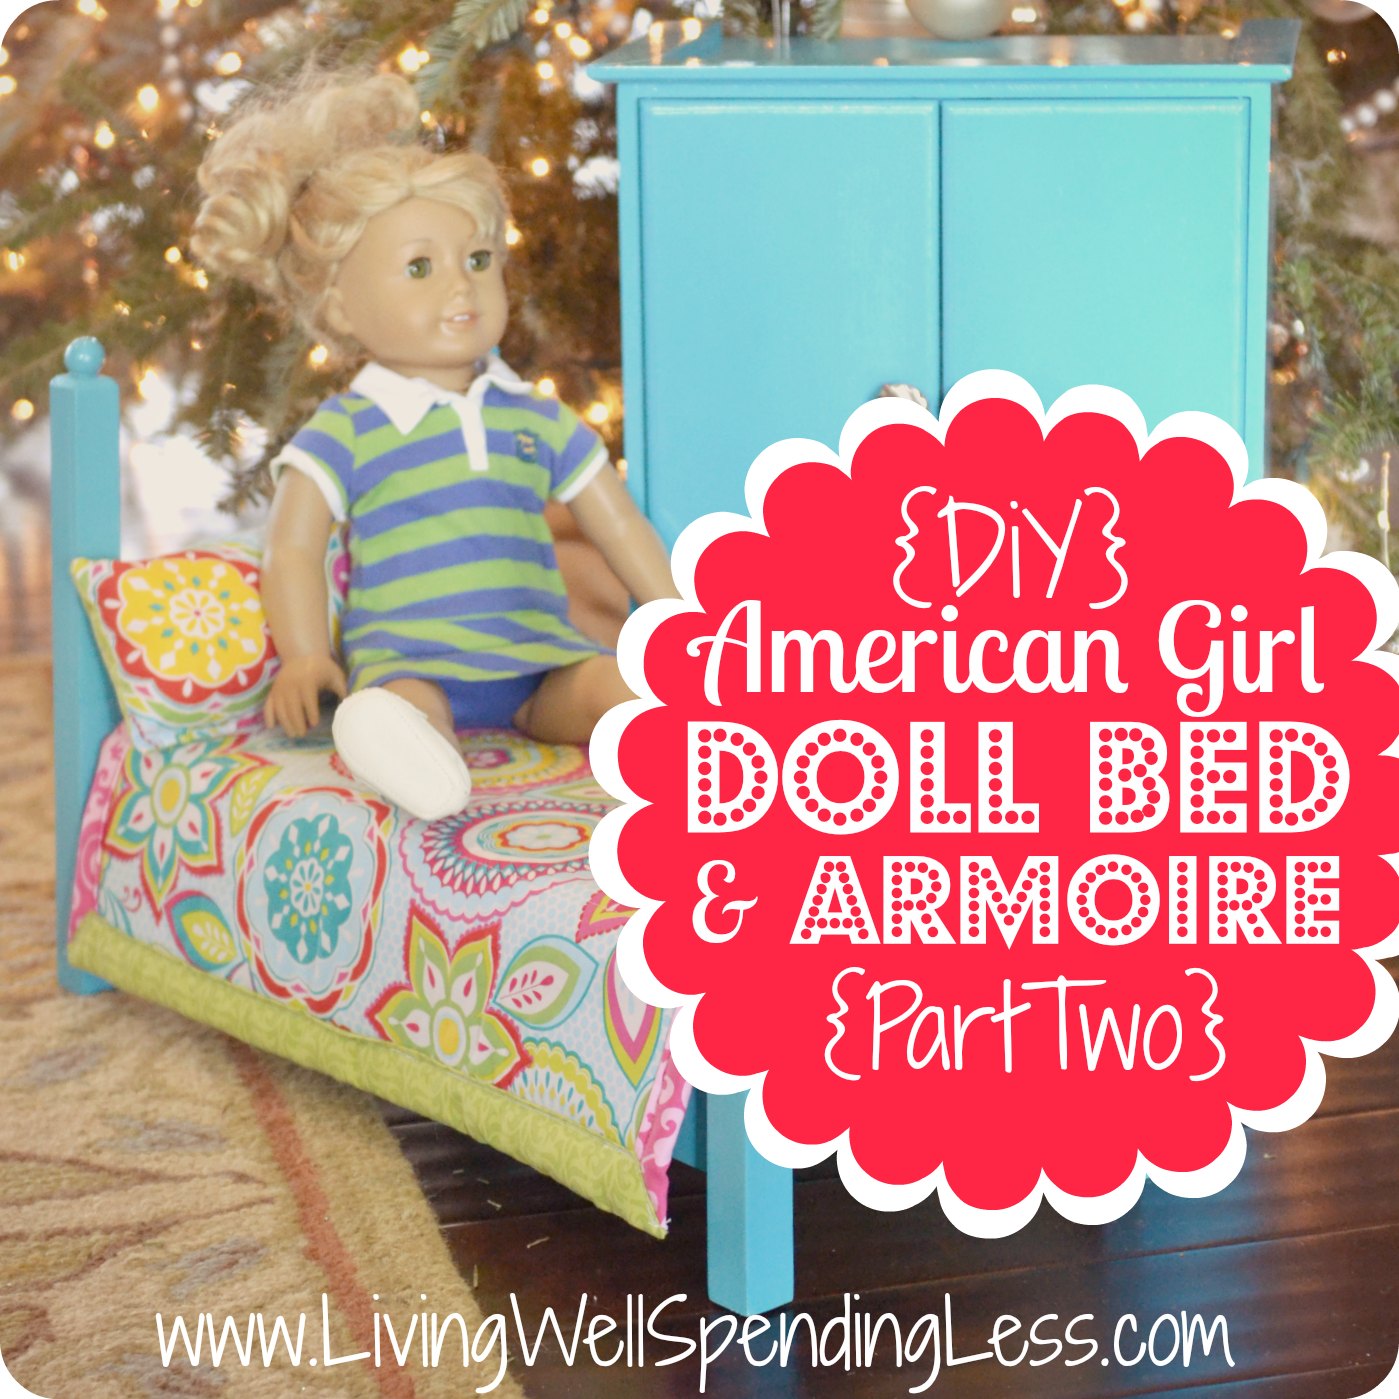 American girl doll furniture clipart.